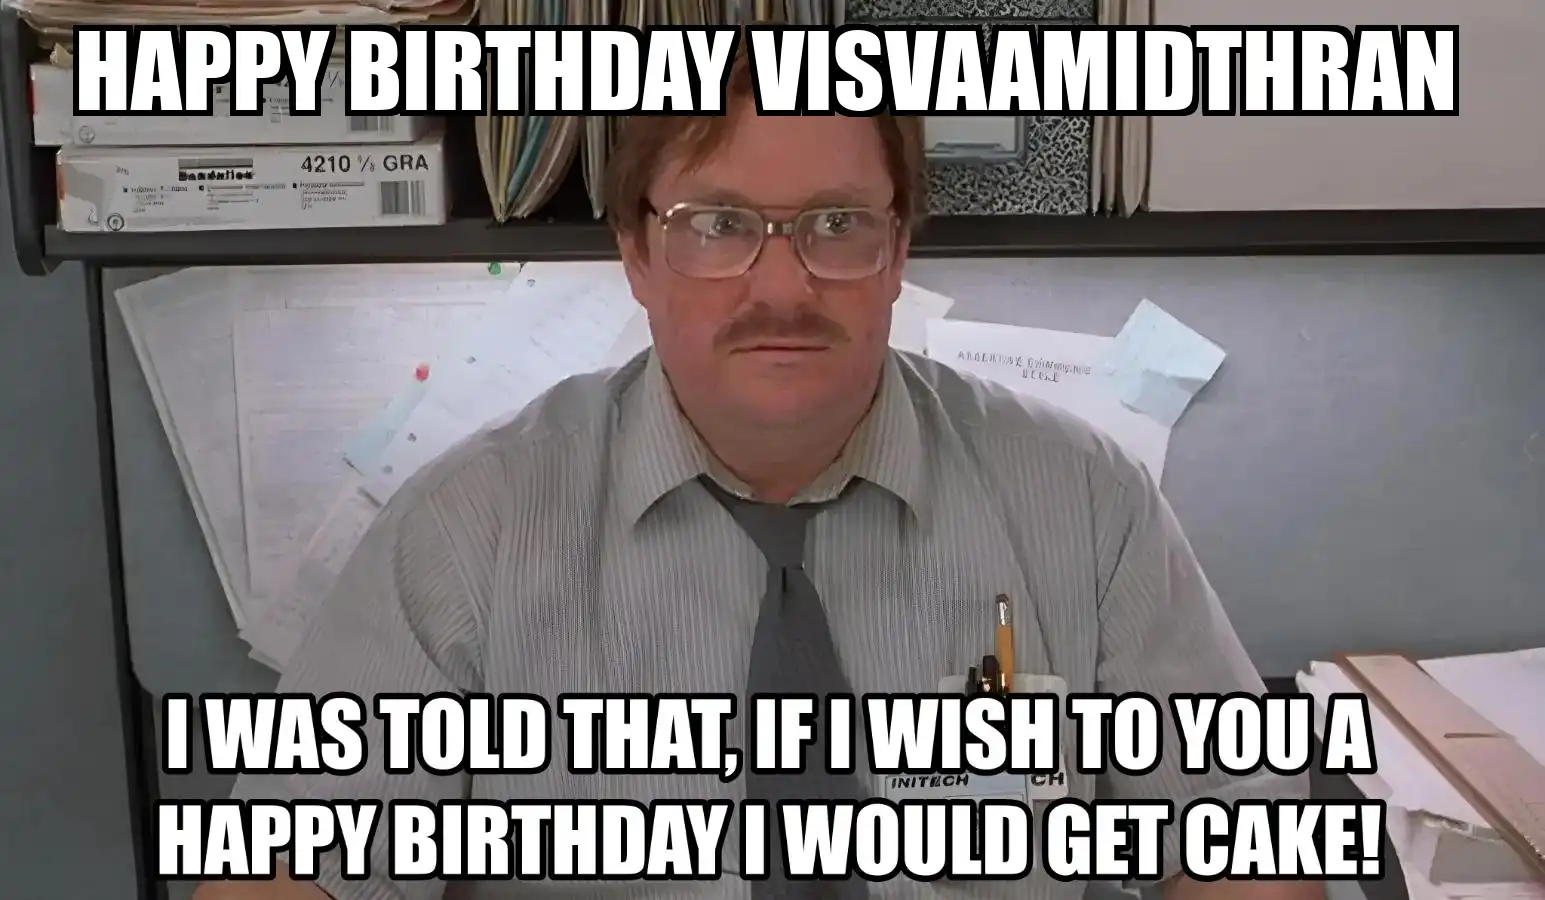 Happy Birthday Visvaamidthran I Would Get A Cake Meme